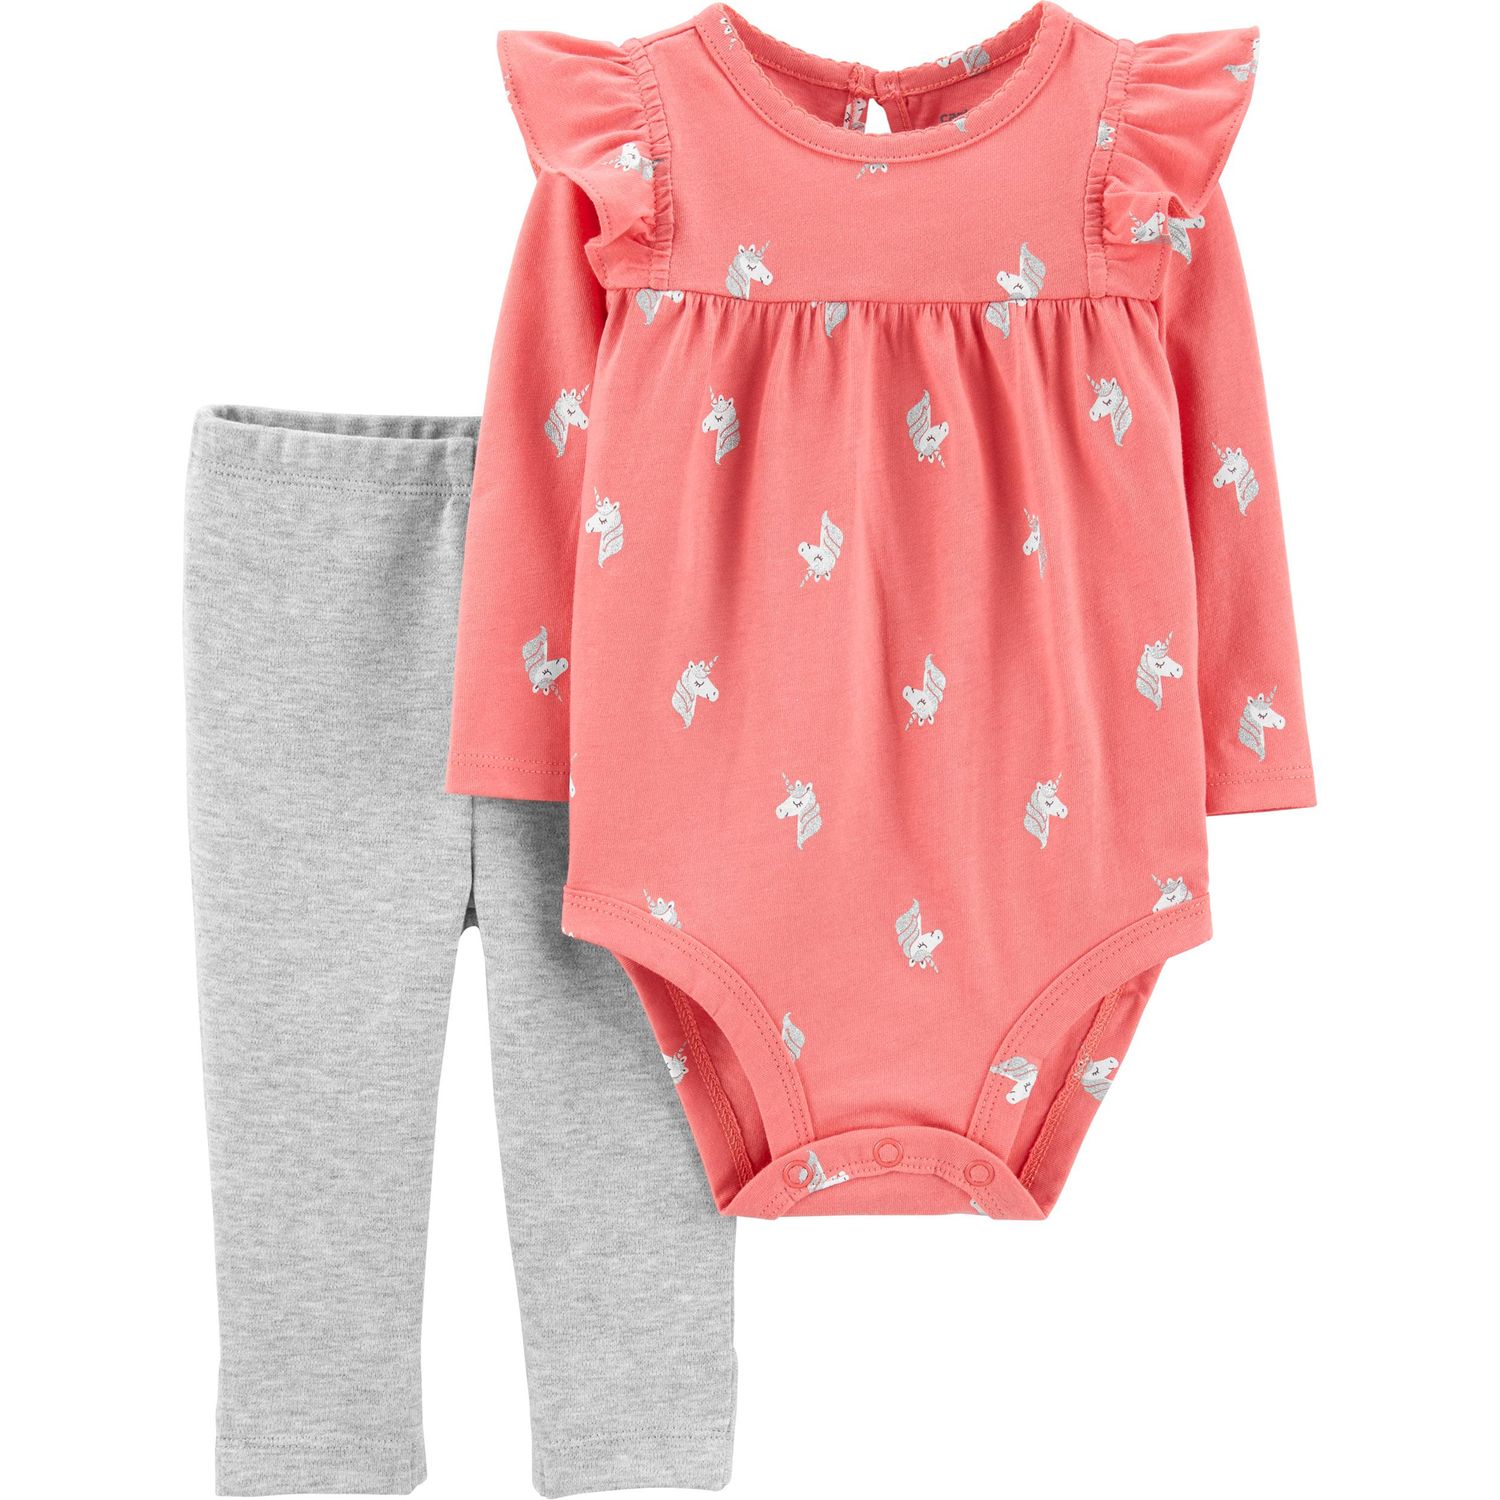 Baby Clothes: Cute Infant \u0026 Newborn 